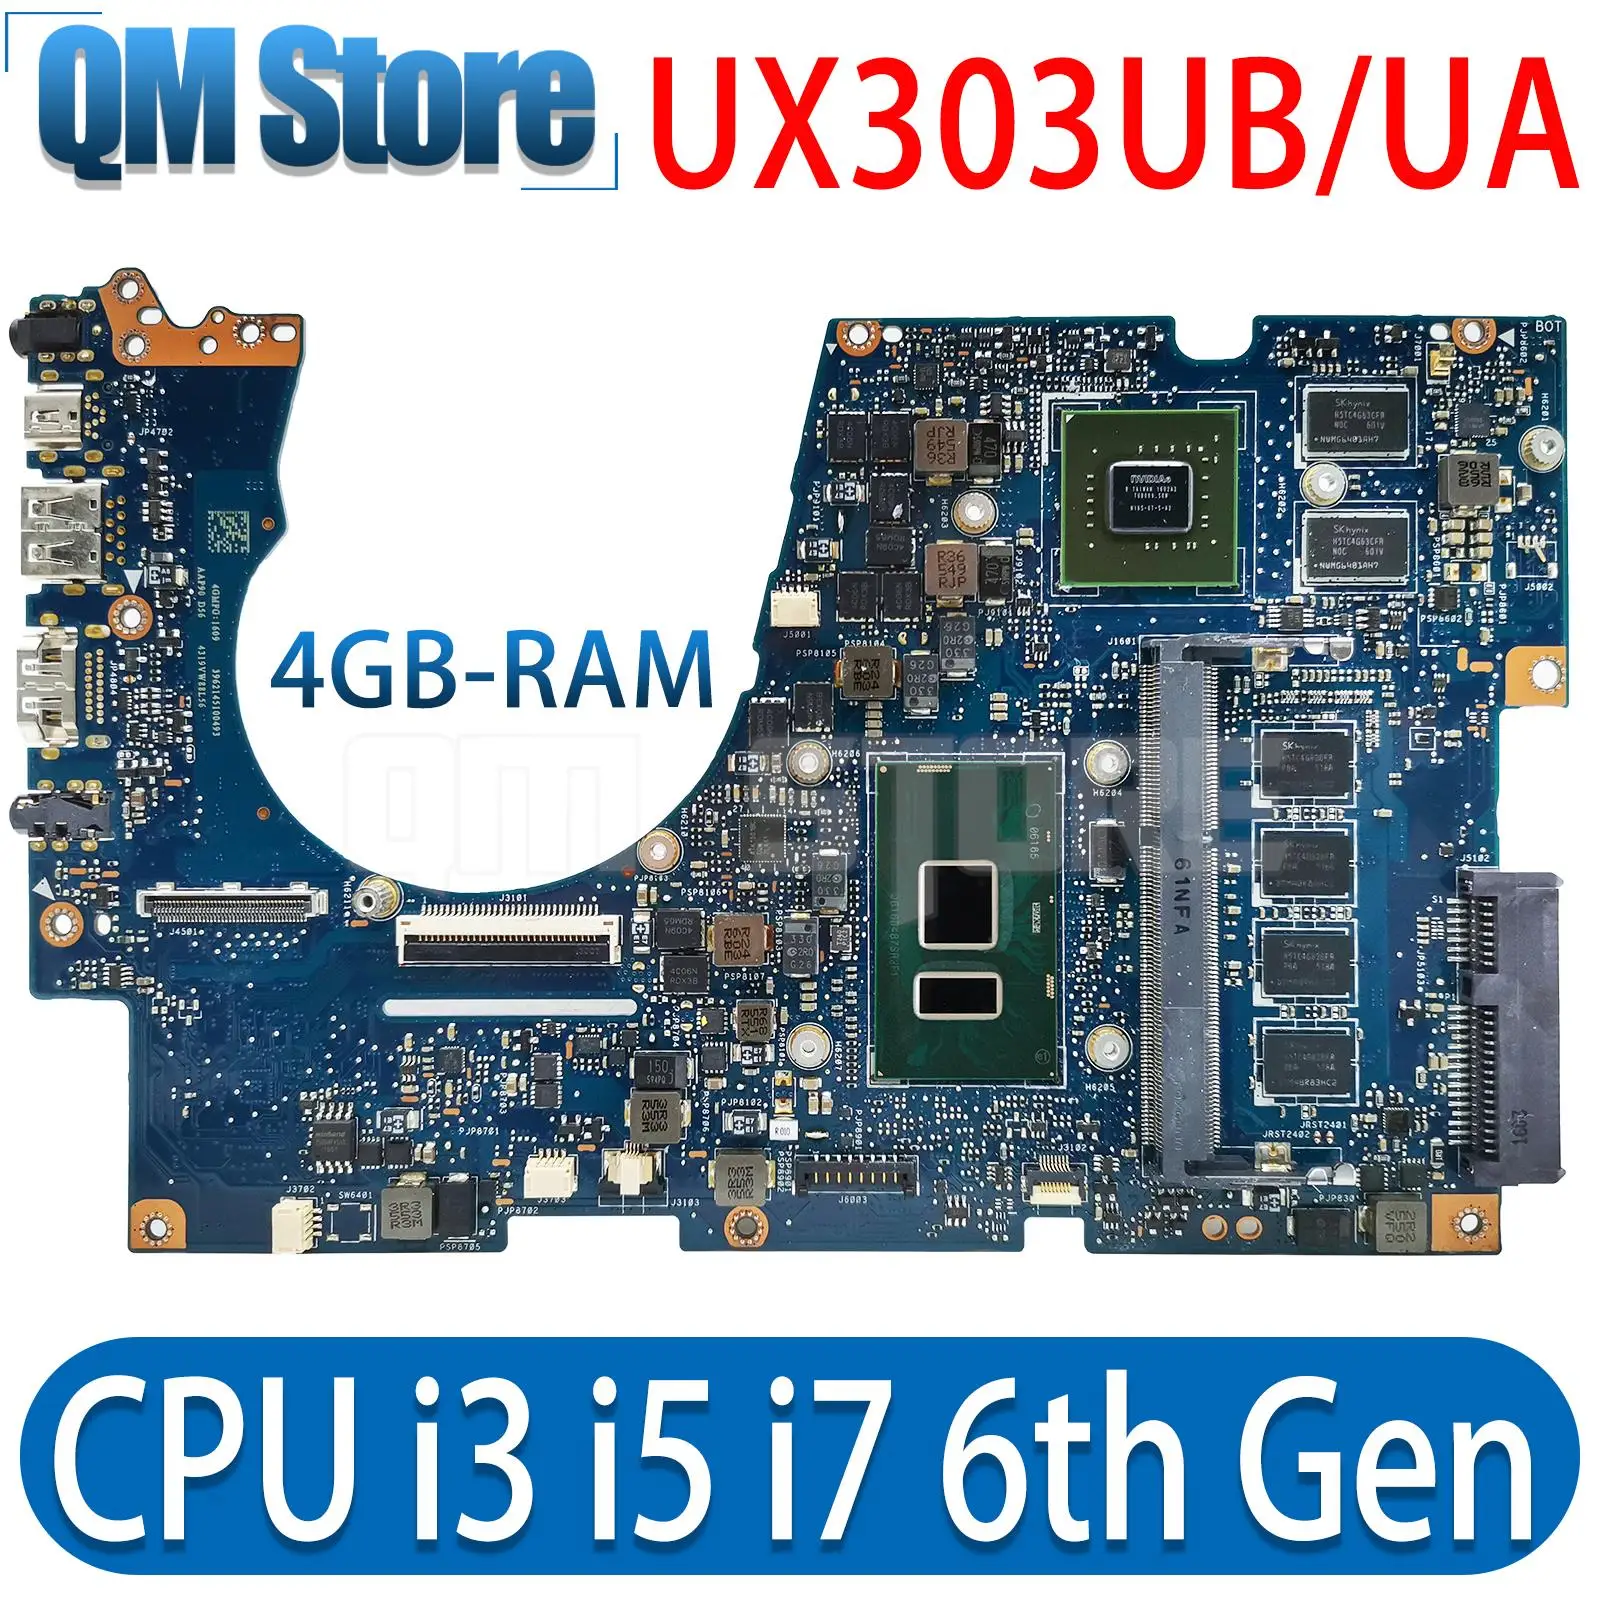 

UX303UB Notebook Mainboard For ASUS UX303 UX303U BX303UA UX303UA U303UB U303UA Laptop Motherboard CPU I3 I5 I7 6th Gen 4GB RAM